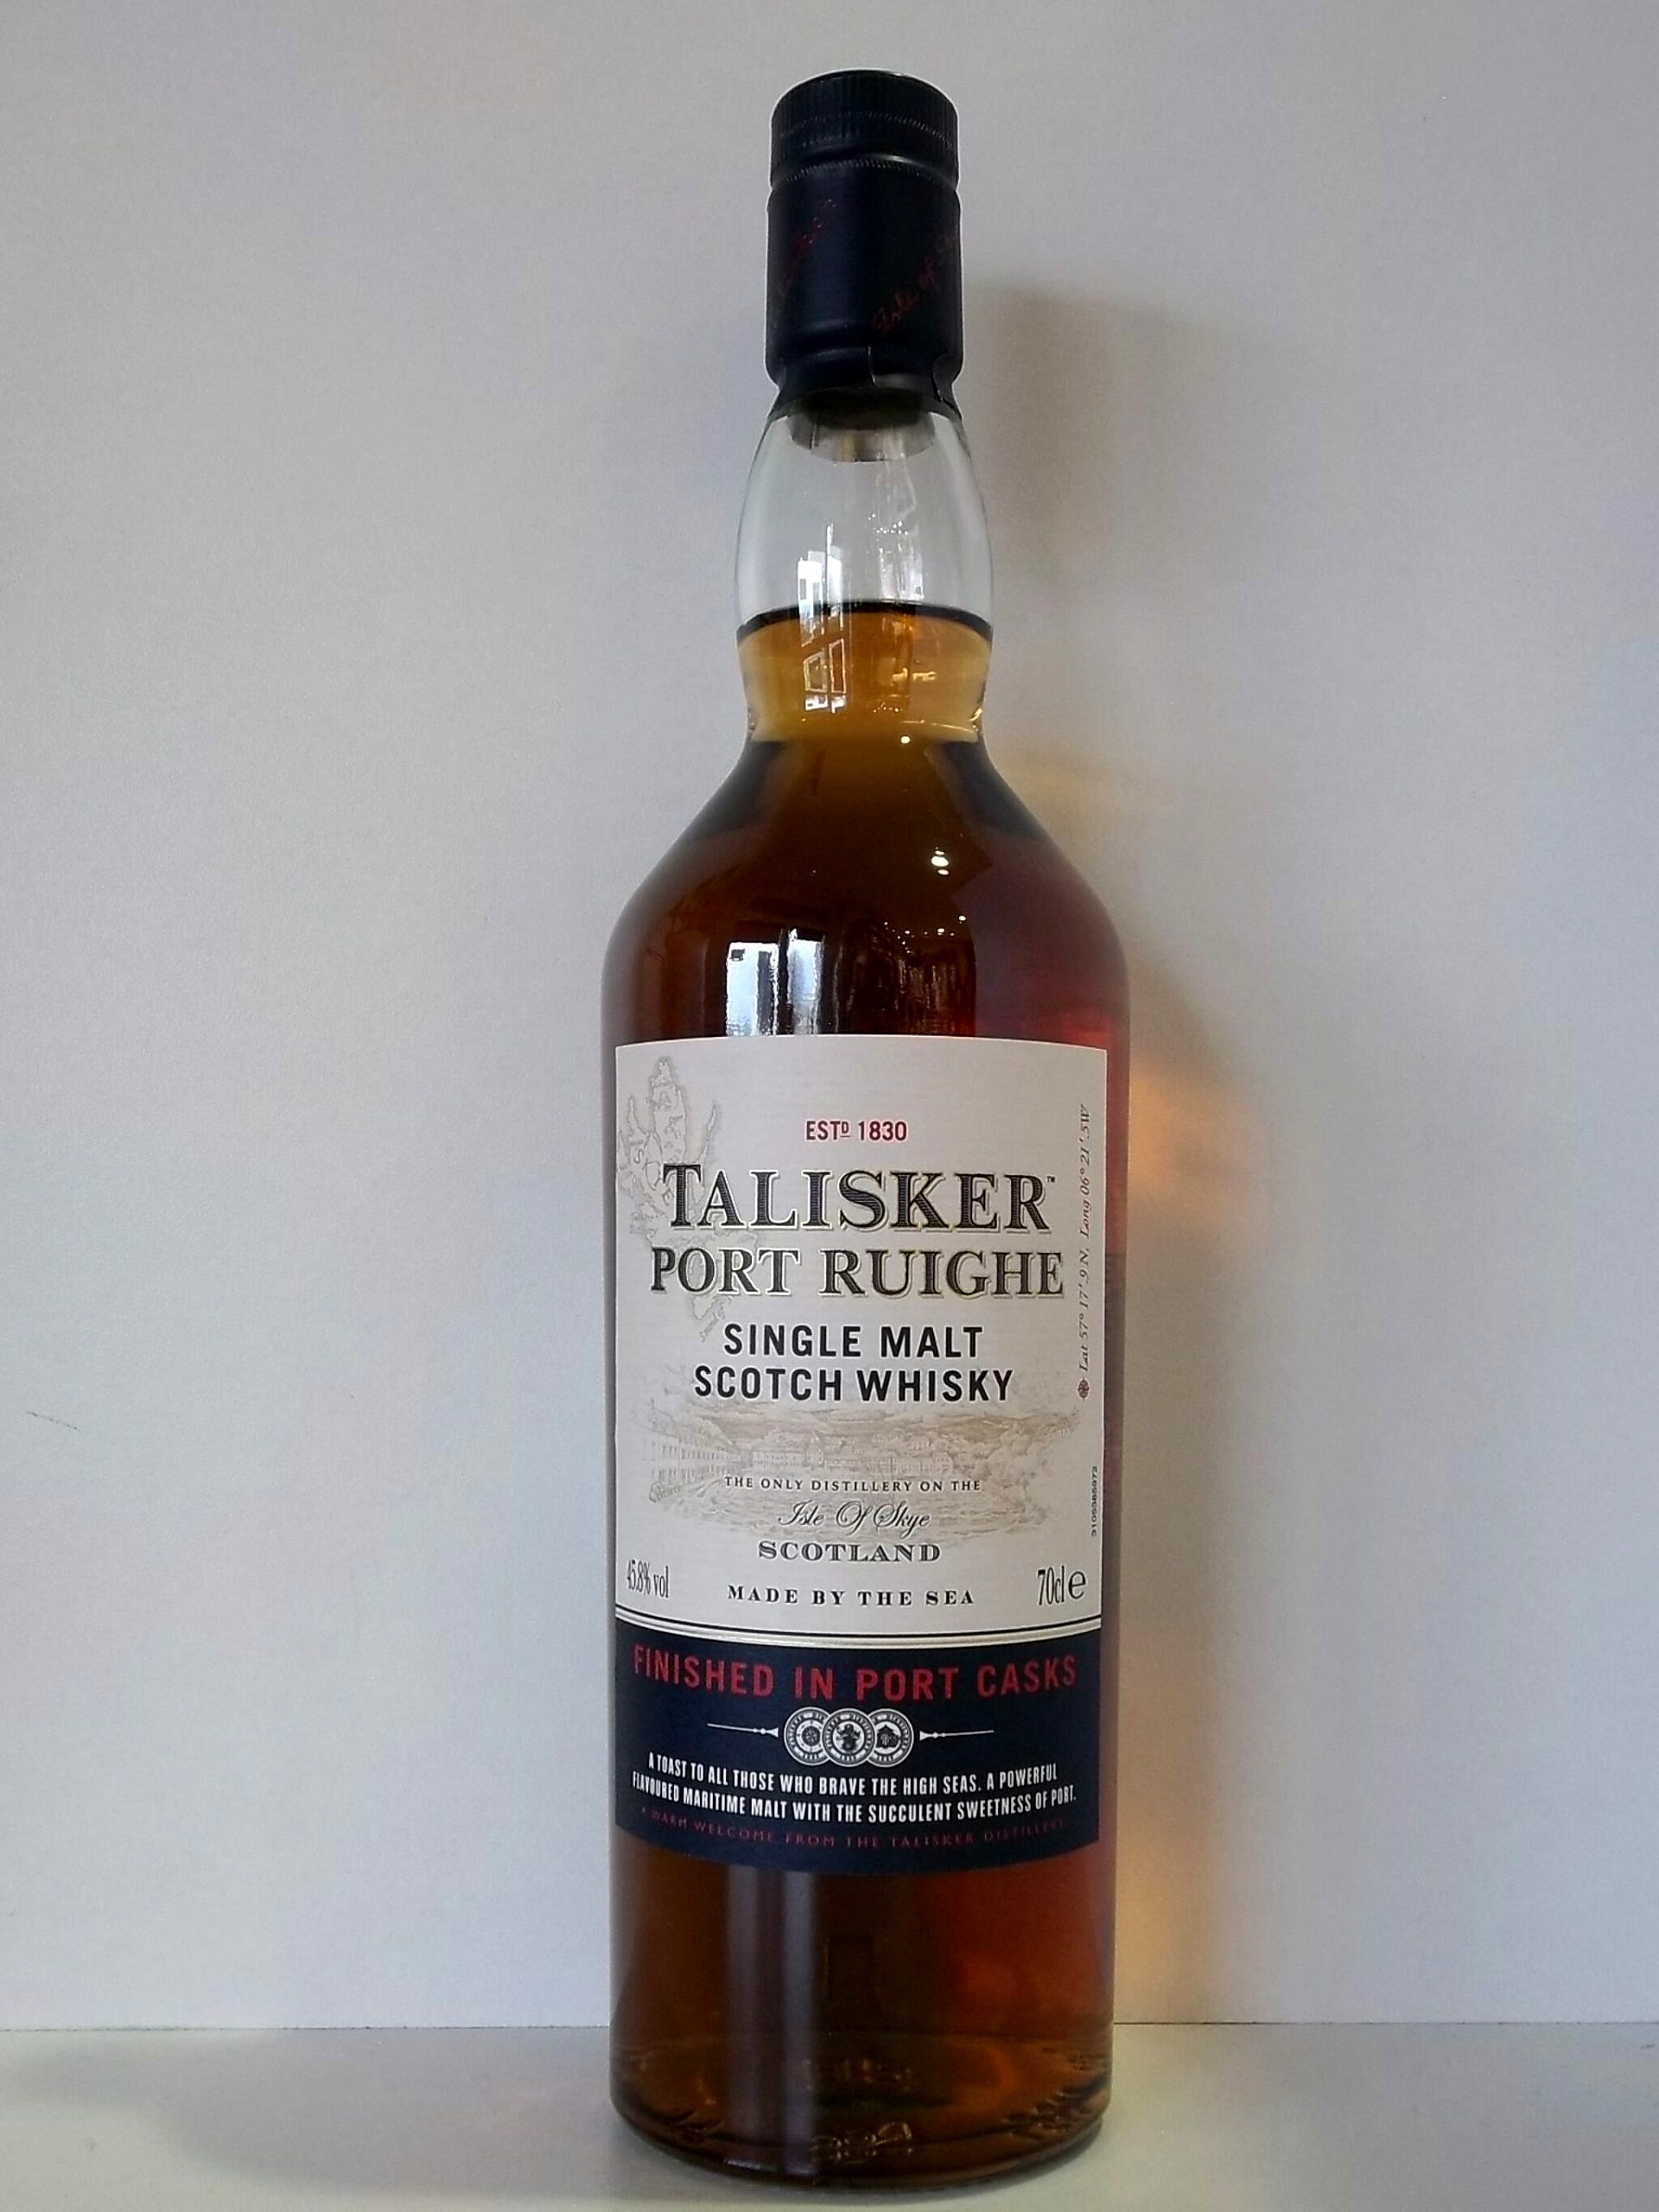 Talisker Port Ruighe Port Cask Whisky écossais Single Malt